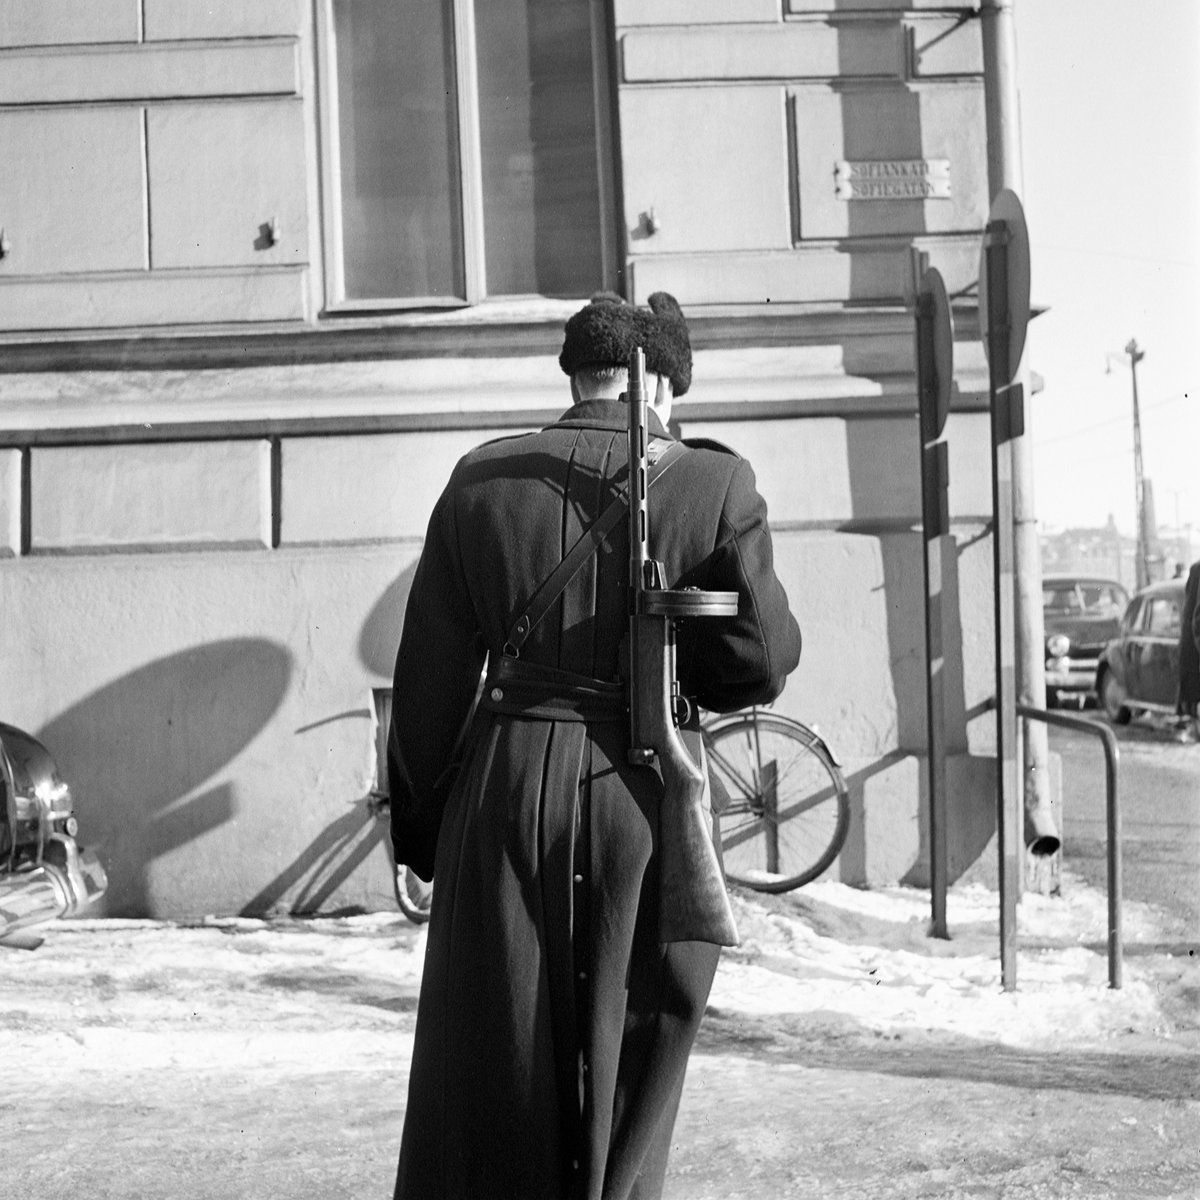 RT @coldwarfinland: A police officer during a general strike in Helsinki, 1956 https://t.co/SrN1EGvK3R